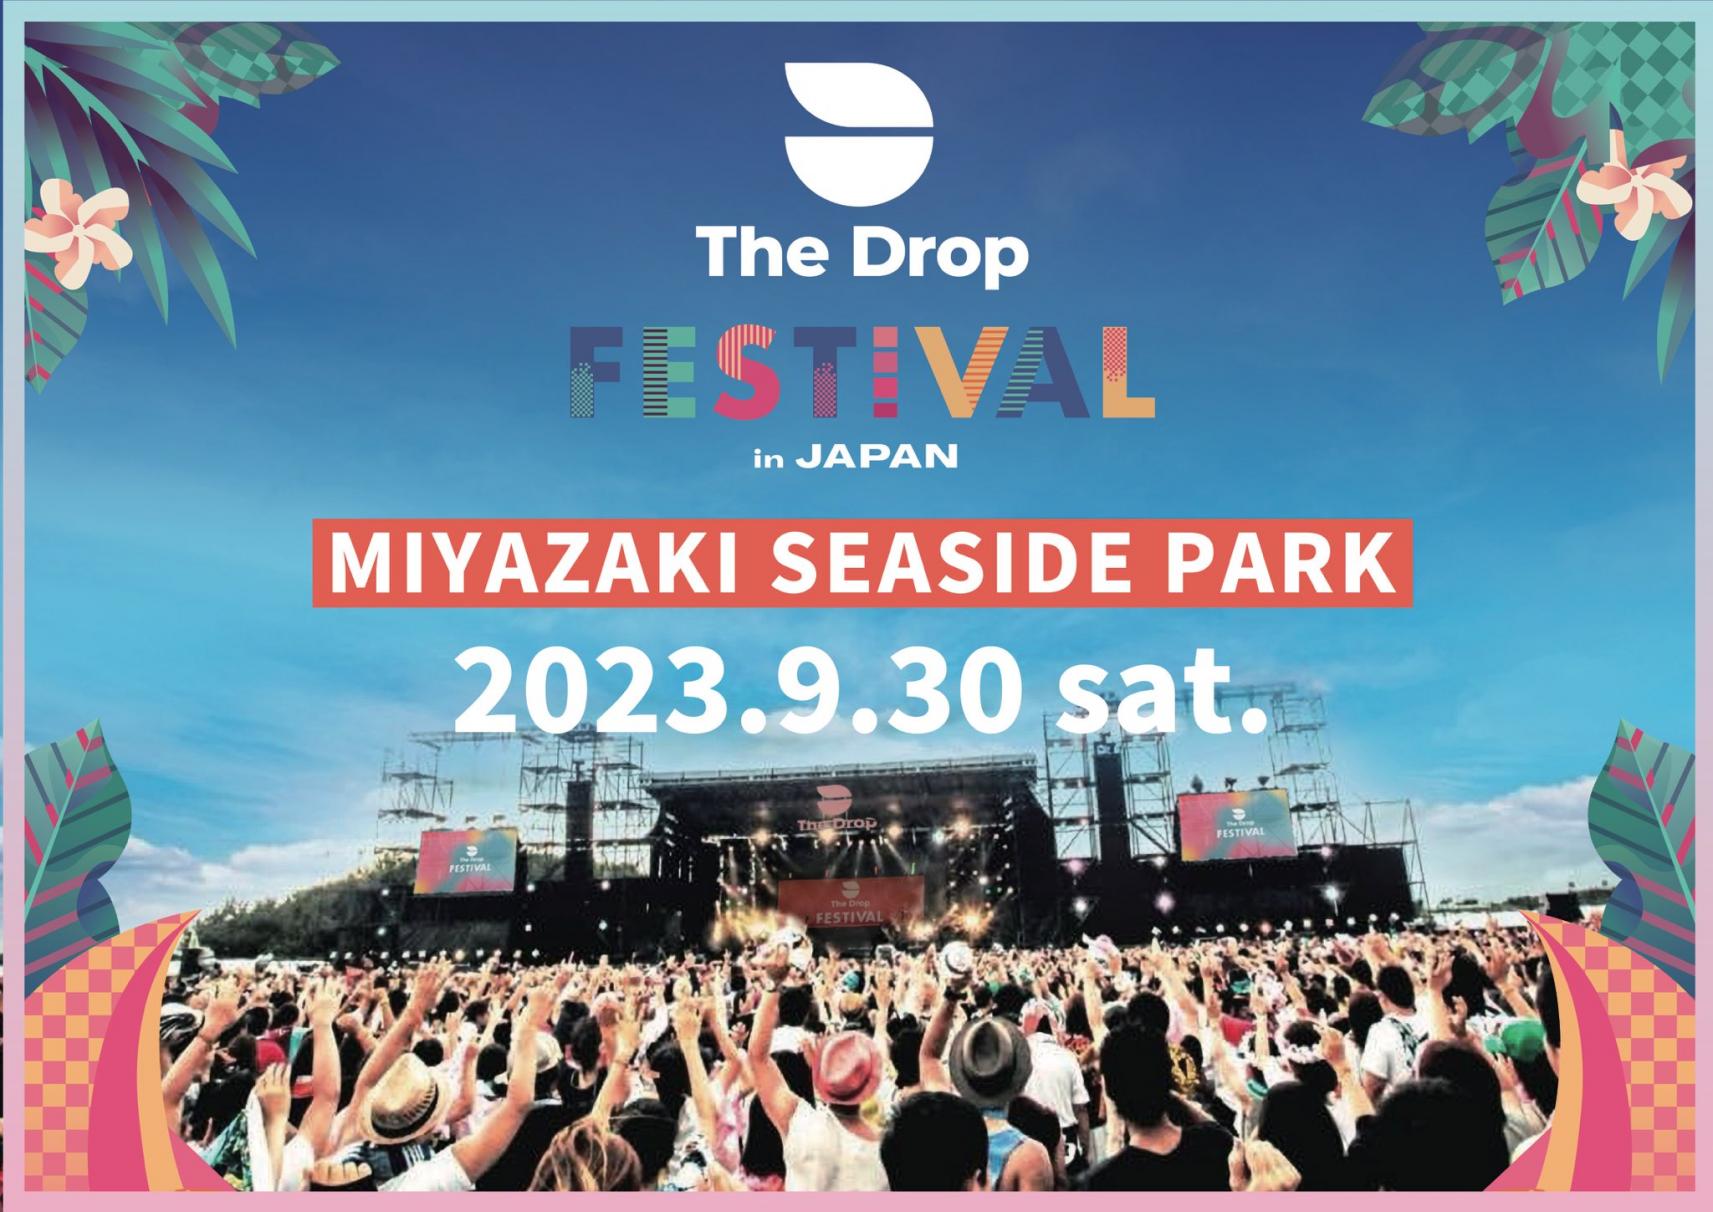 THE DROP FESTIVAL 2023 in Japan-1